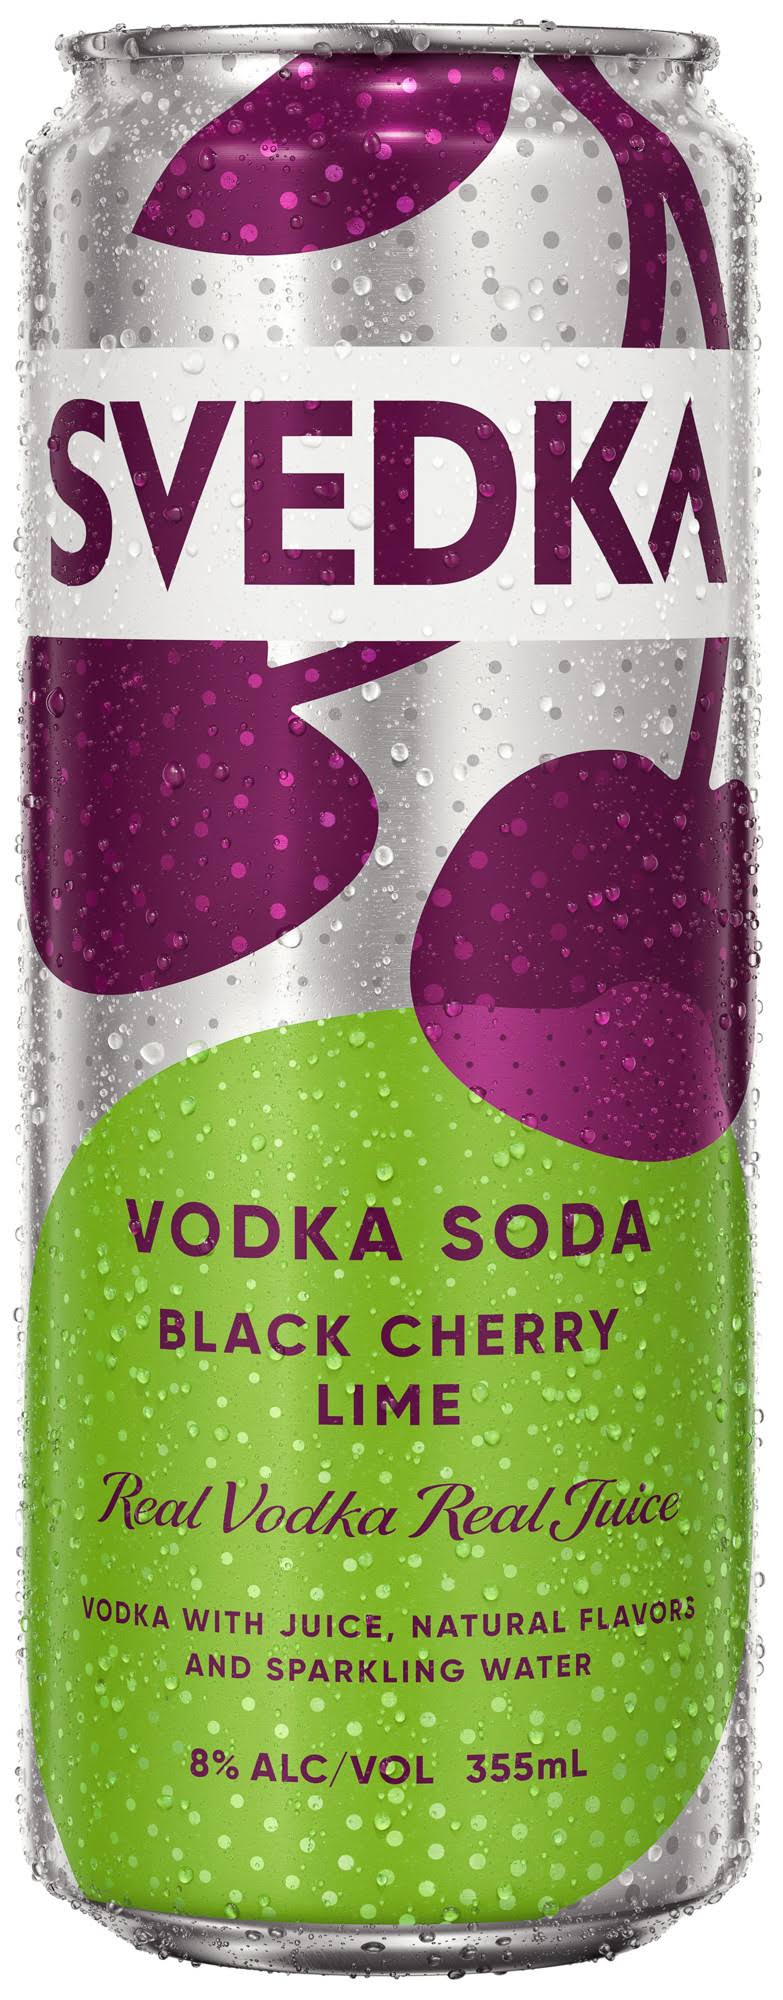 SVEDKA Black Cherry Lime Vodka Soda Ready to Drink Cocktail Can